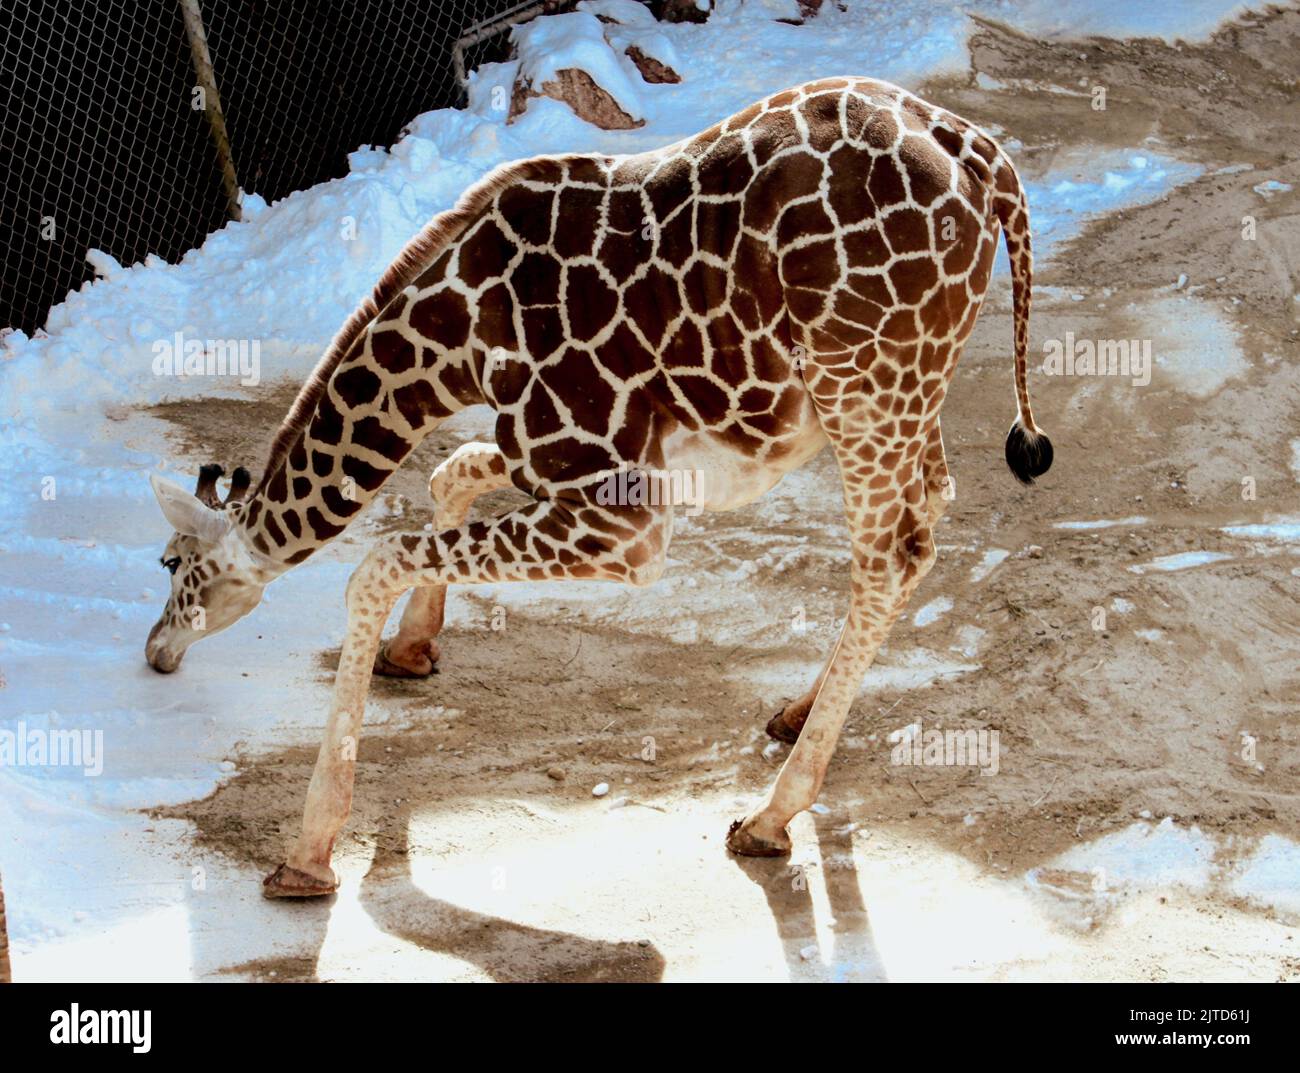 Giraffe Eating Snow at Zoo Stock Photo